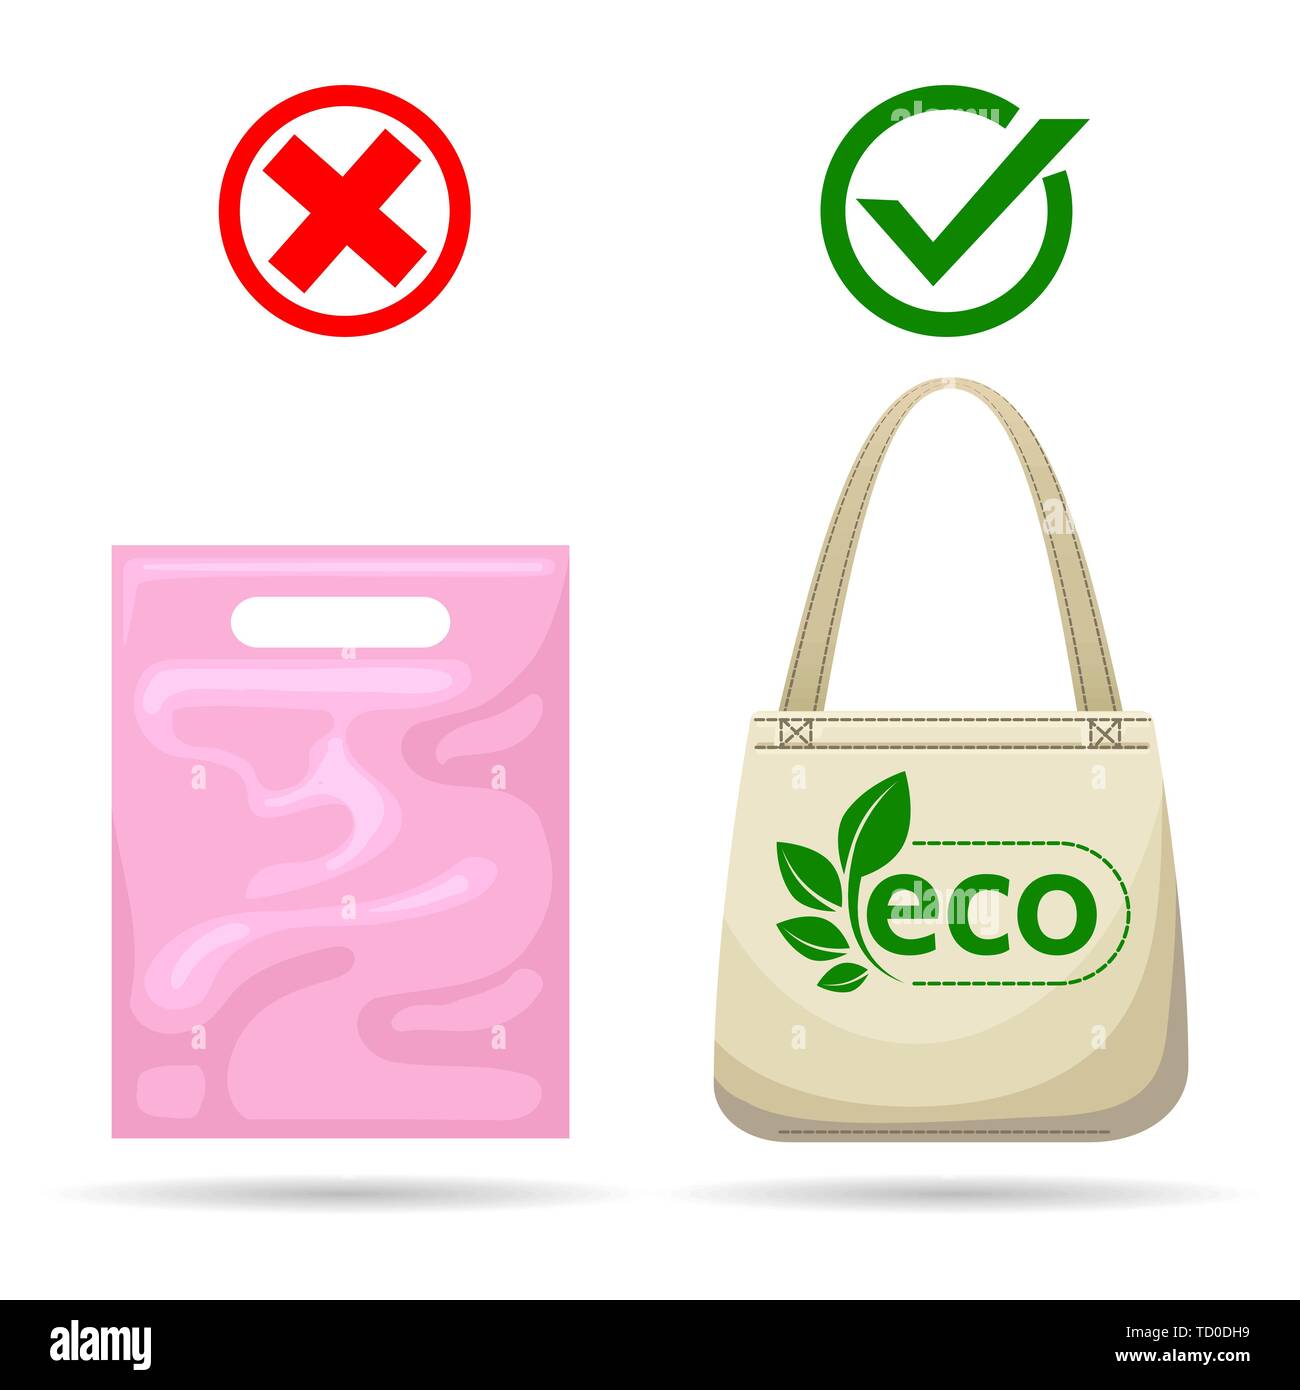 civilization homework very No plastic bags. Vector eco friendly textile recycling bag vs disposable  plastic polythene polluting shoppingbag Stock Vector Image & Art - Alamy